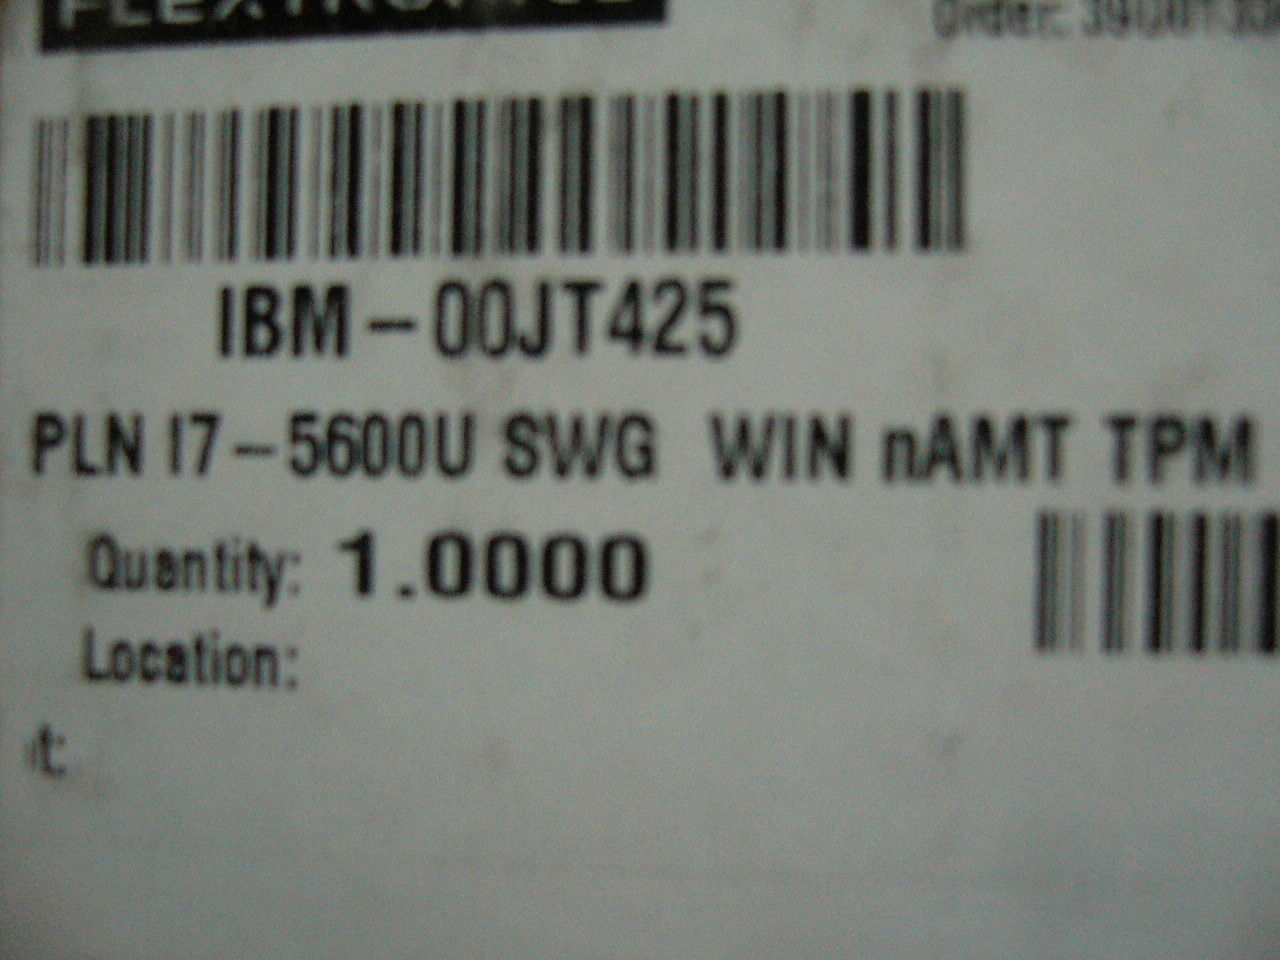 QTY 1x Lenovo Thinkpad W550S laptop motherboard intel i7-5600U SWG Win nAMT TPM - Click Image to Close